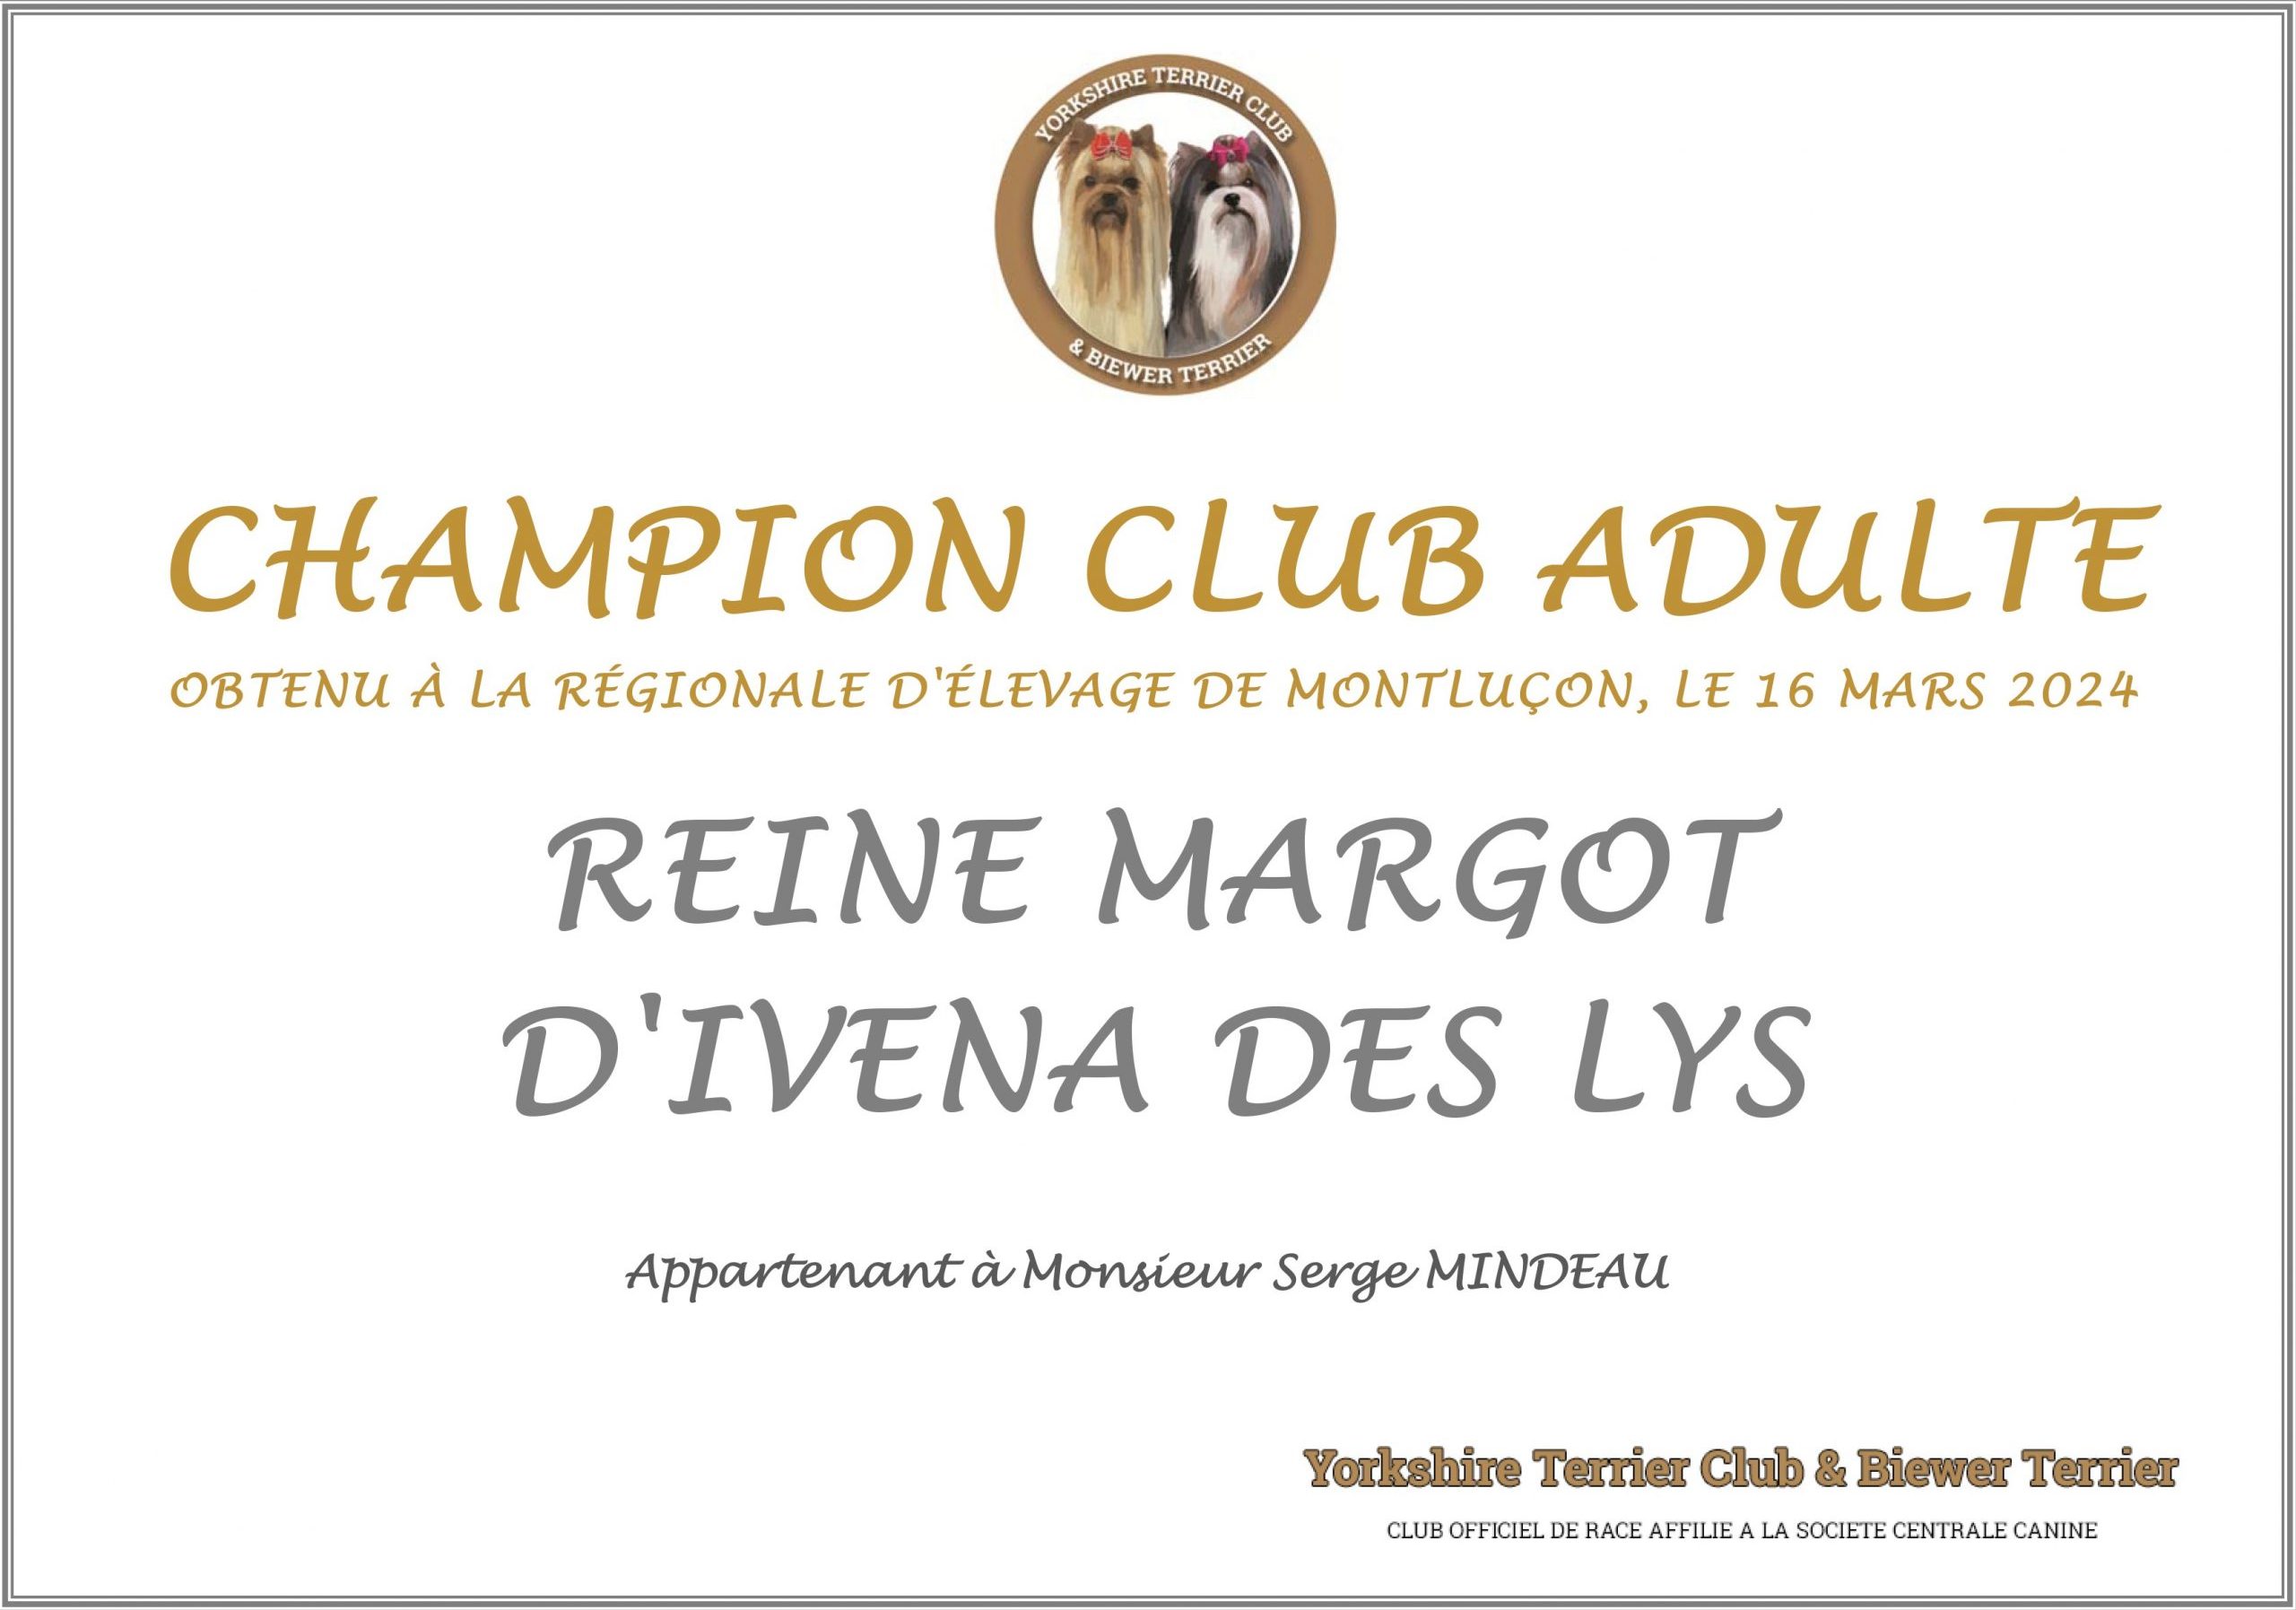 Microsoft Word - DIPLOME champion club adulte REINE MARGOT.docx